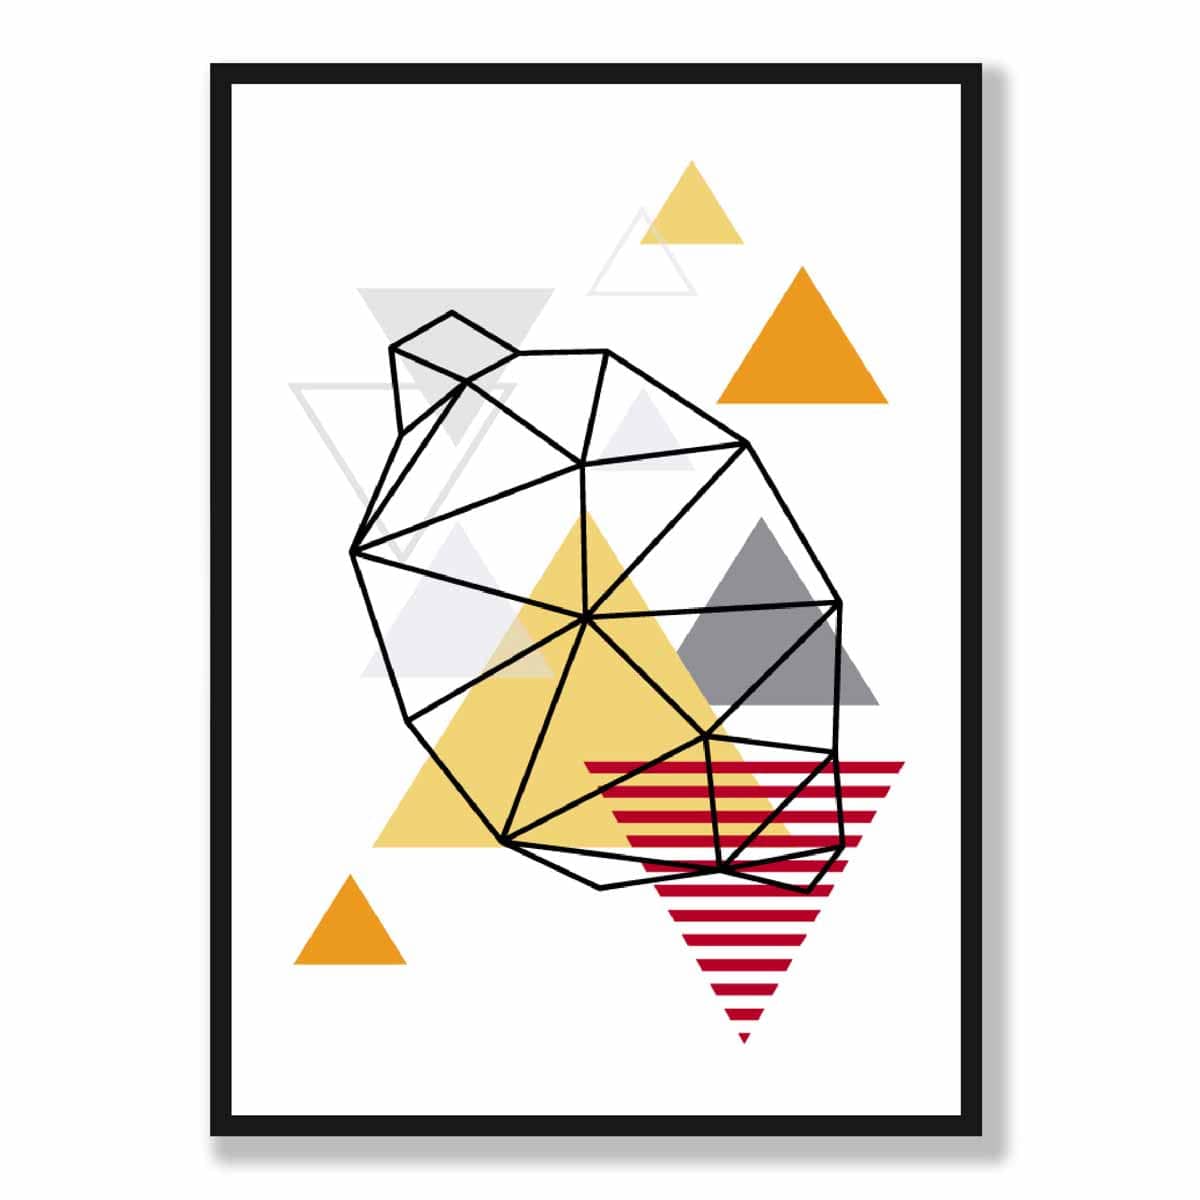 Geometric Fruit Line art Poster of Lemon in Orange Red Yellow